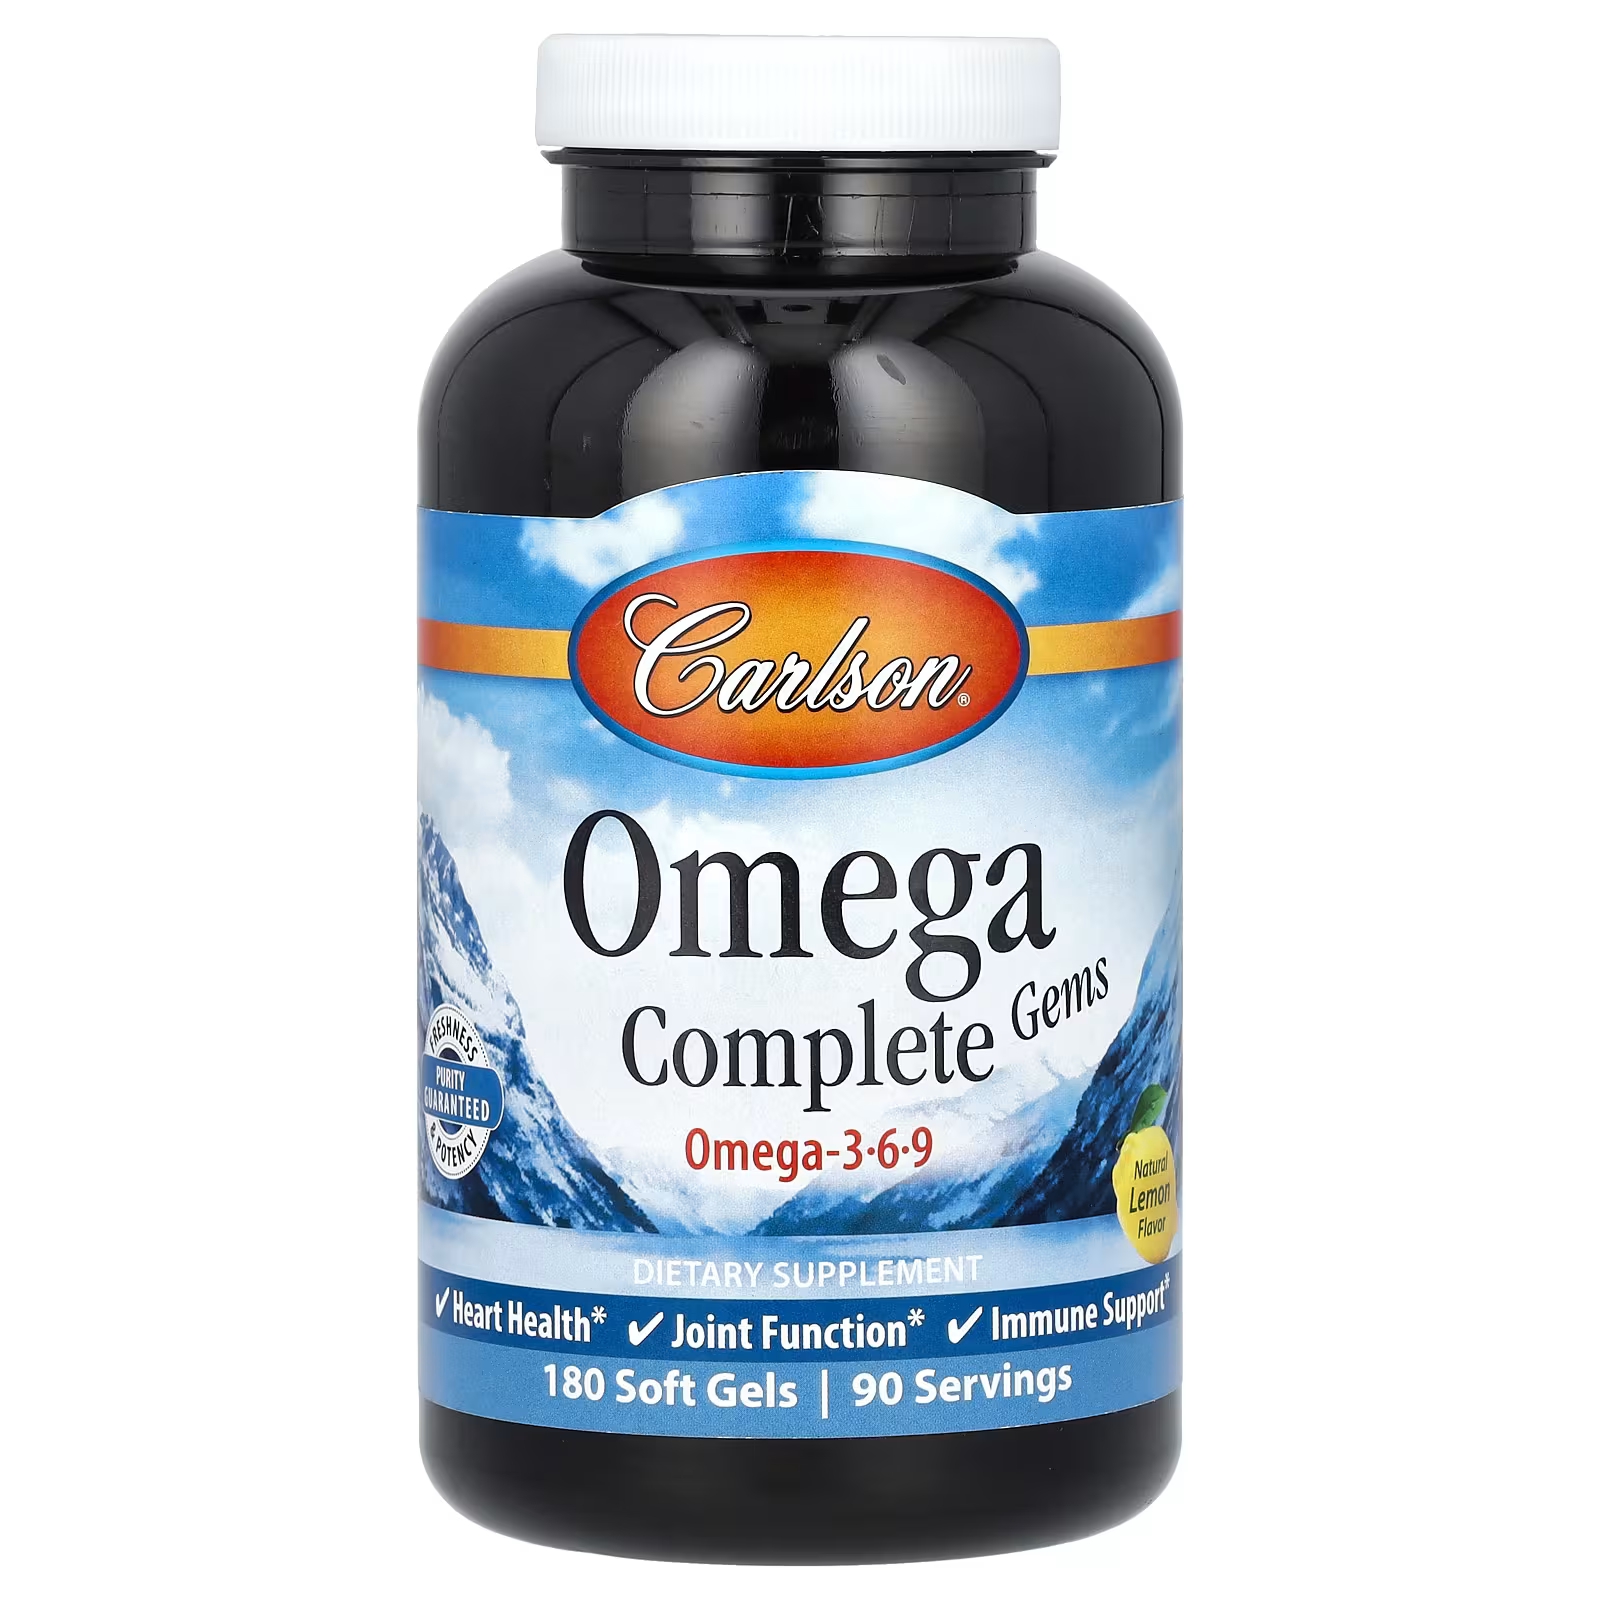 Carlson Omega Complete Gems Omega-3-6-9 Натуральный лимон 180 мягких таблеток carlson elite omega 3 с витаминами d и k натуральный вкус лимона 180 мягких таблеток